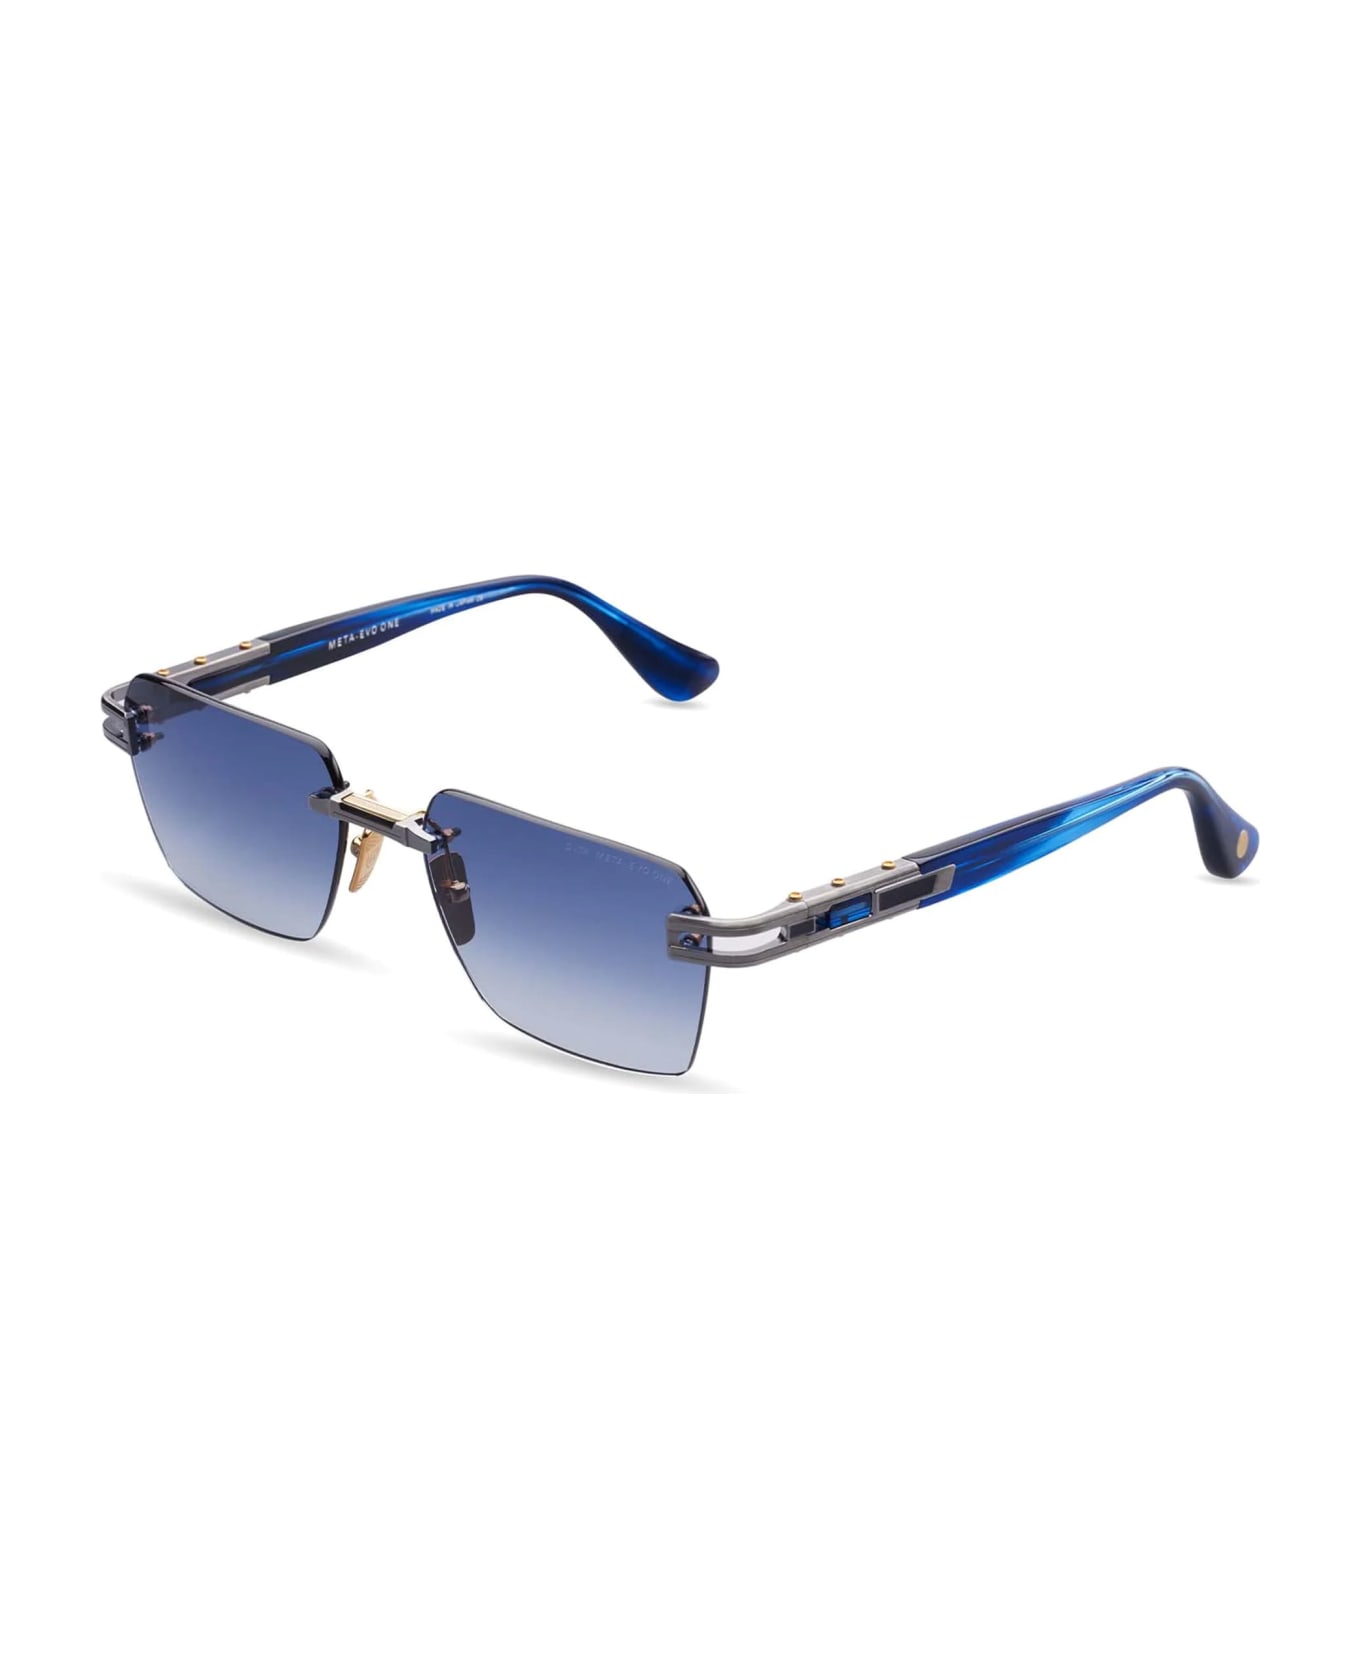 Dita Meta-evo One - Antique Silver / Blue Swirl Sunglasses - Silver サングラス